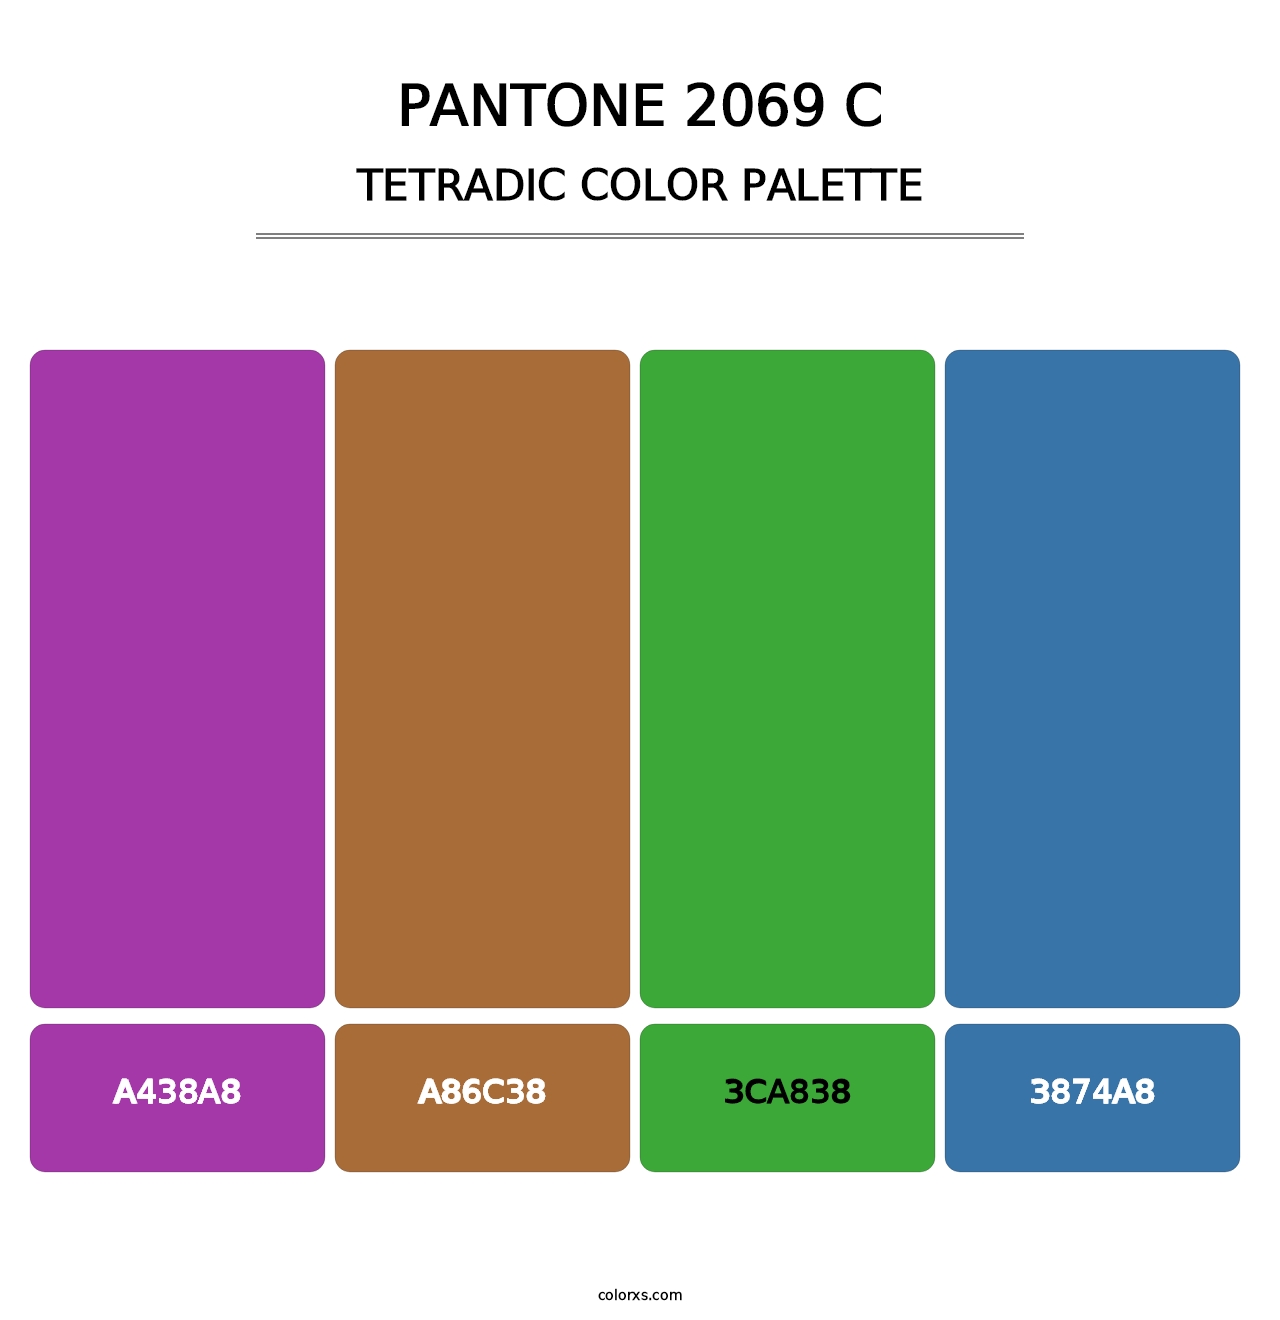 PANTONE 2069 C - Tetradic Color Palette